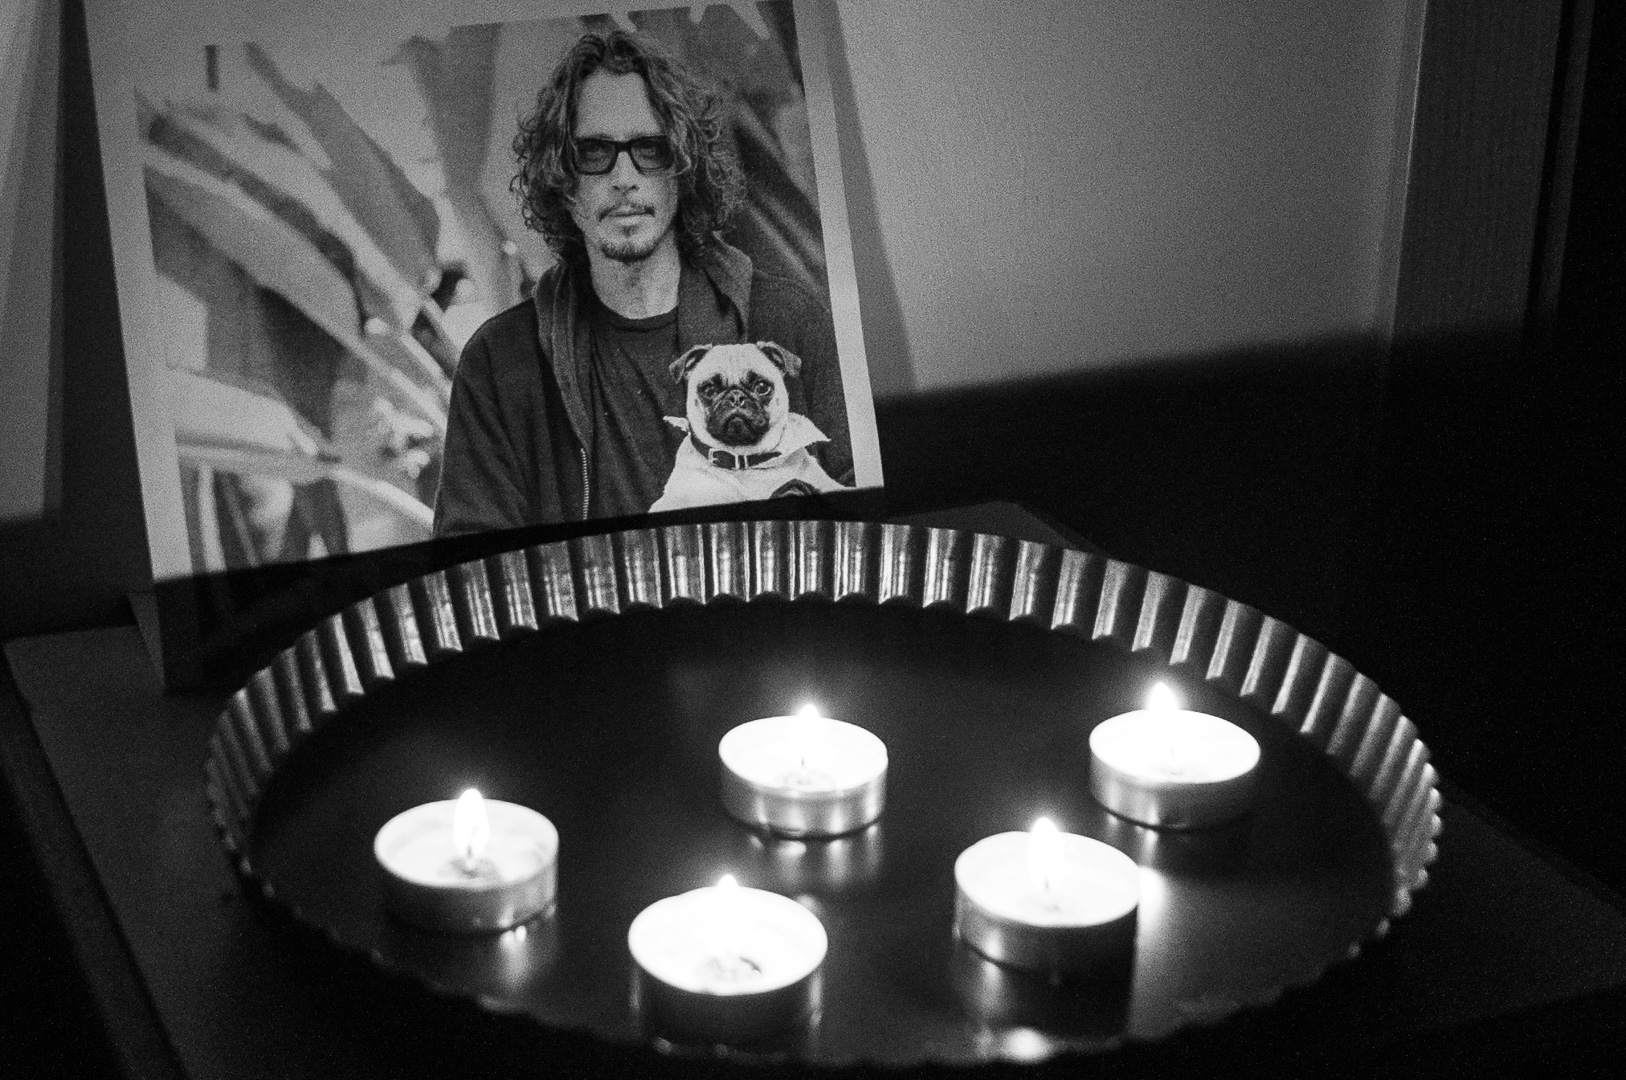 Chris Cornell 1964-2017